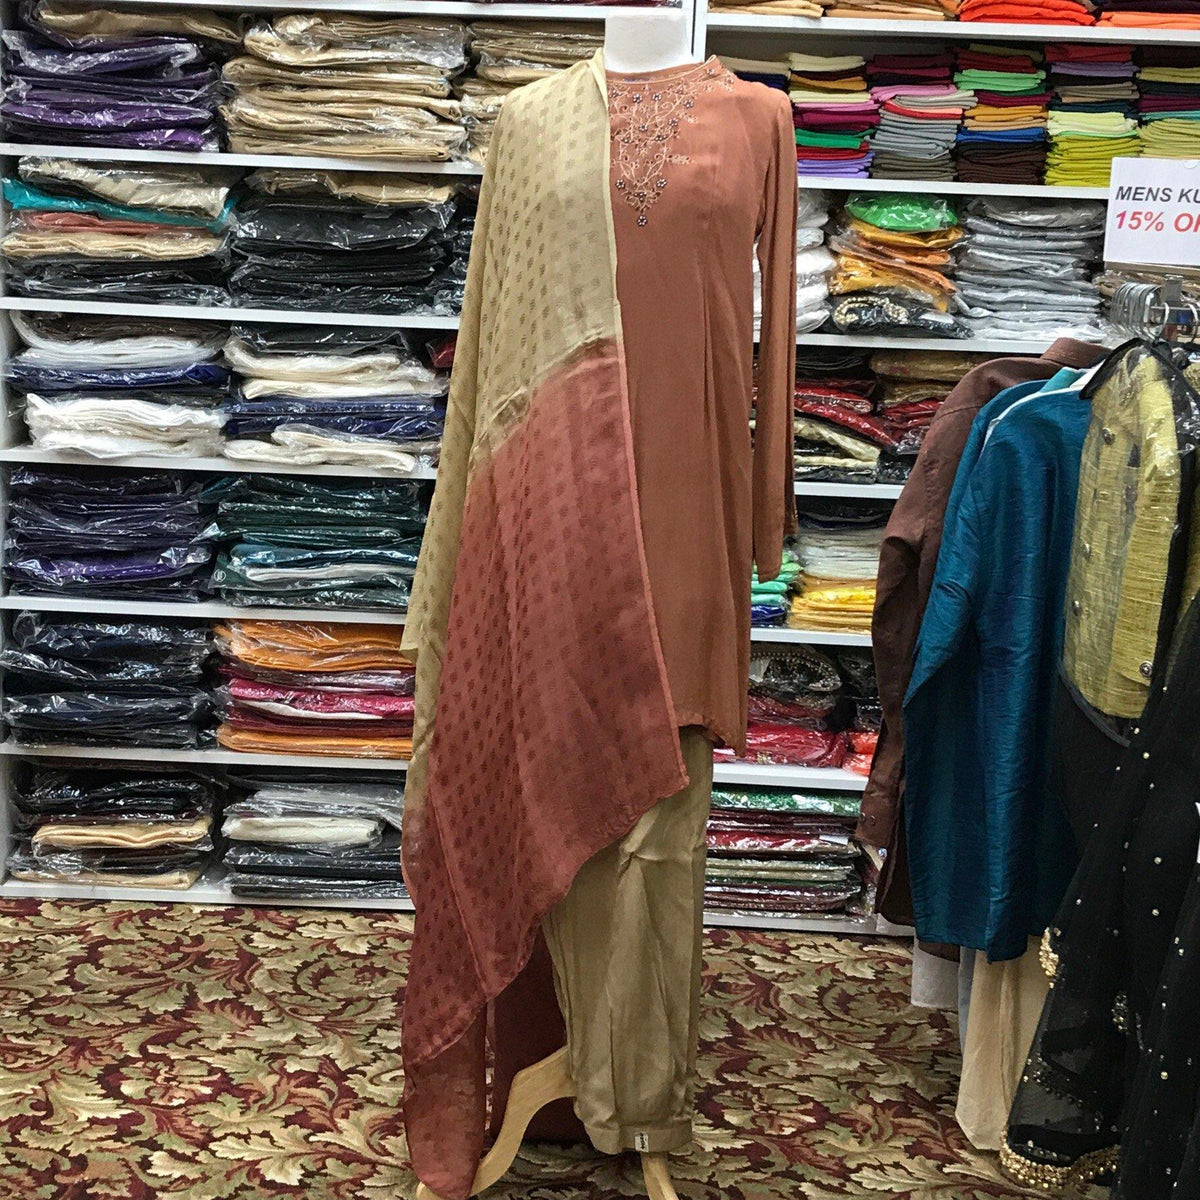 Kurta Shalwar Dupatta Size 38 - Mirage Sari Center